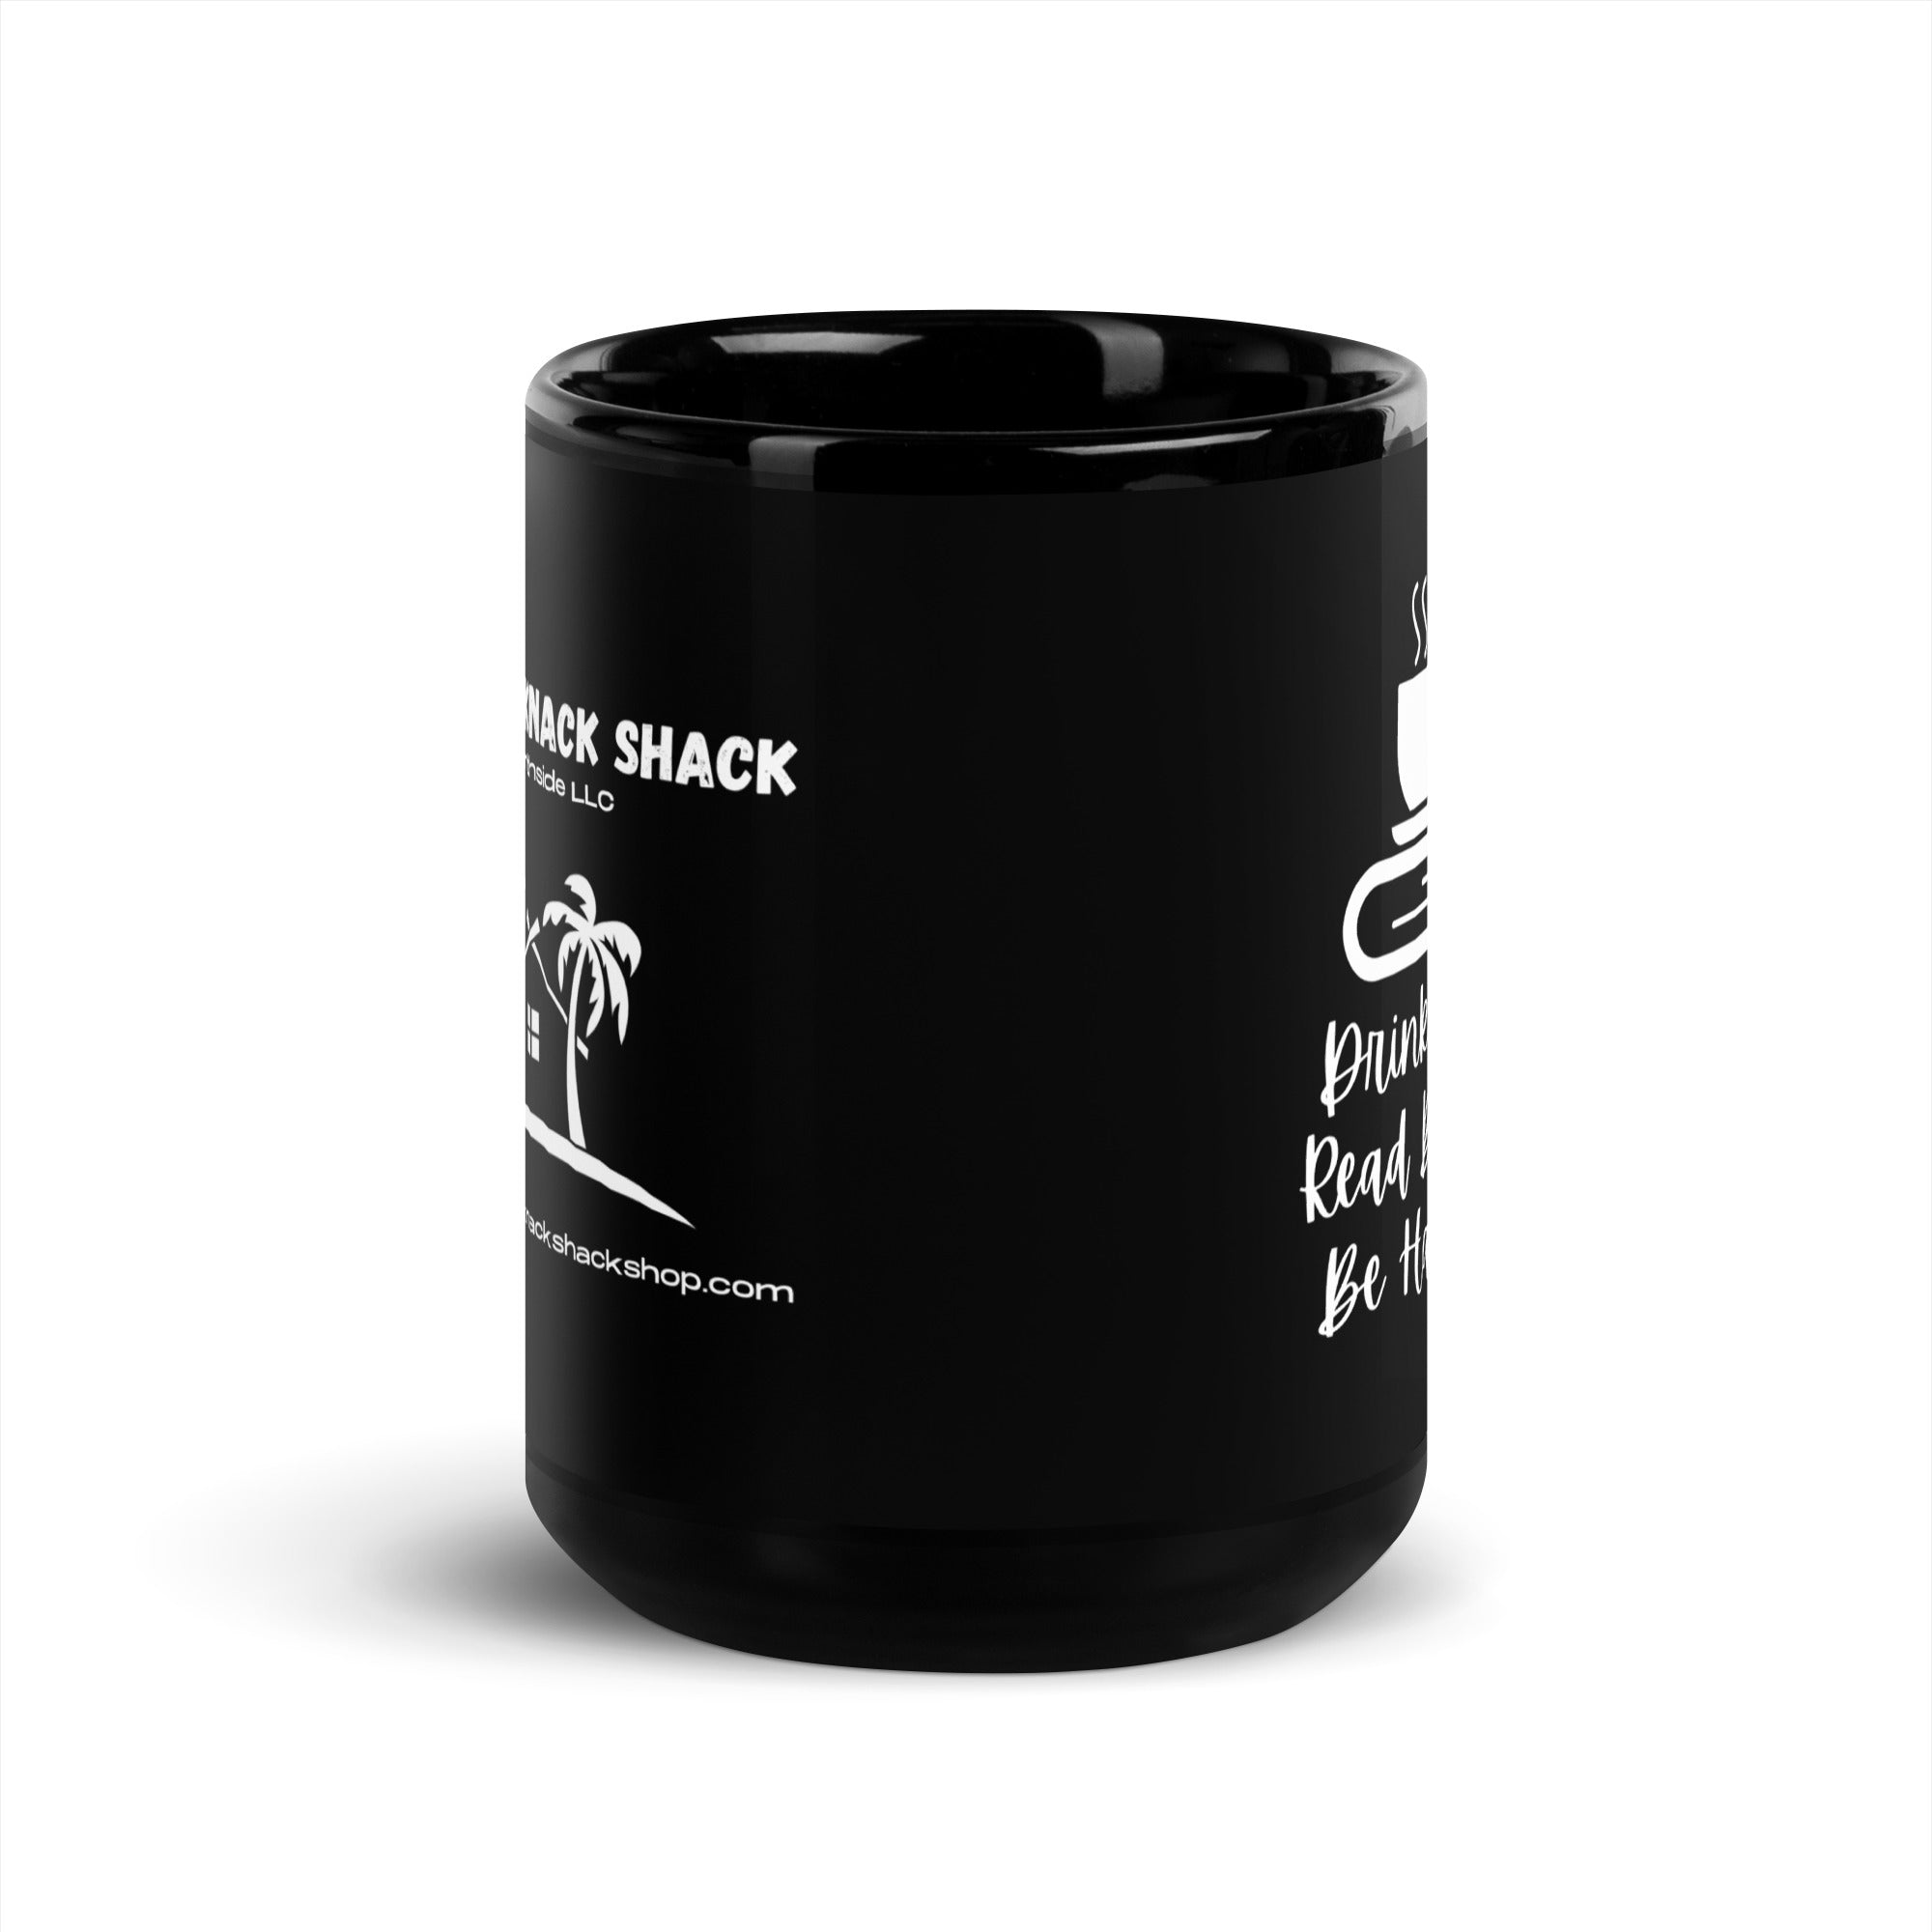 Black Glossy Mug - Drink Tea, Read Books, Be Happy (L-Handed)